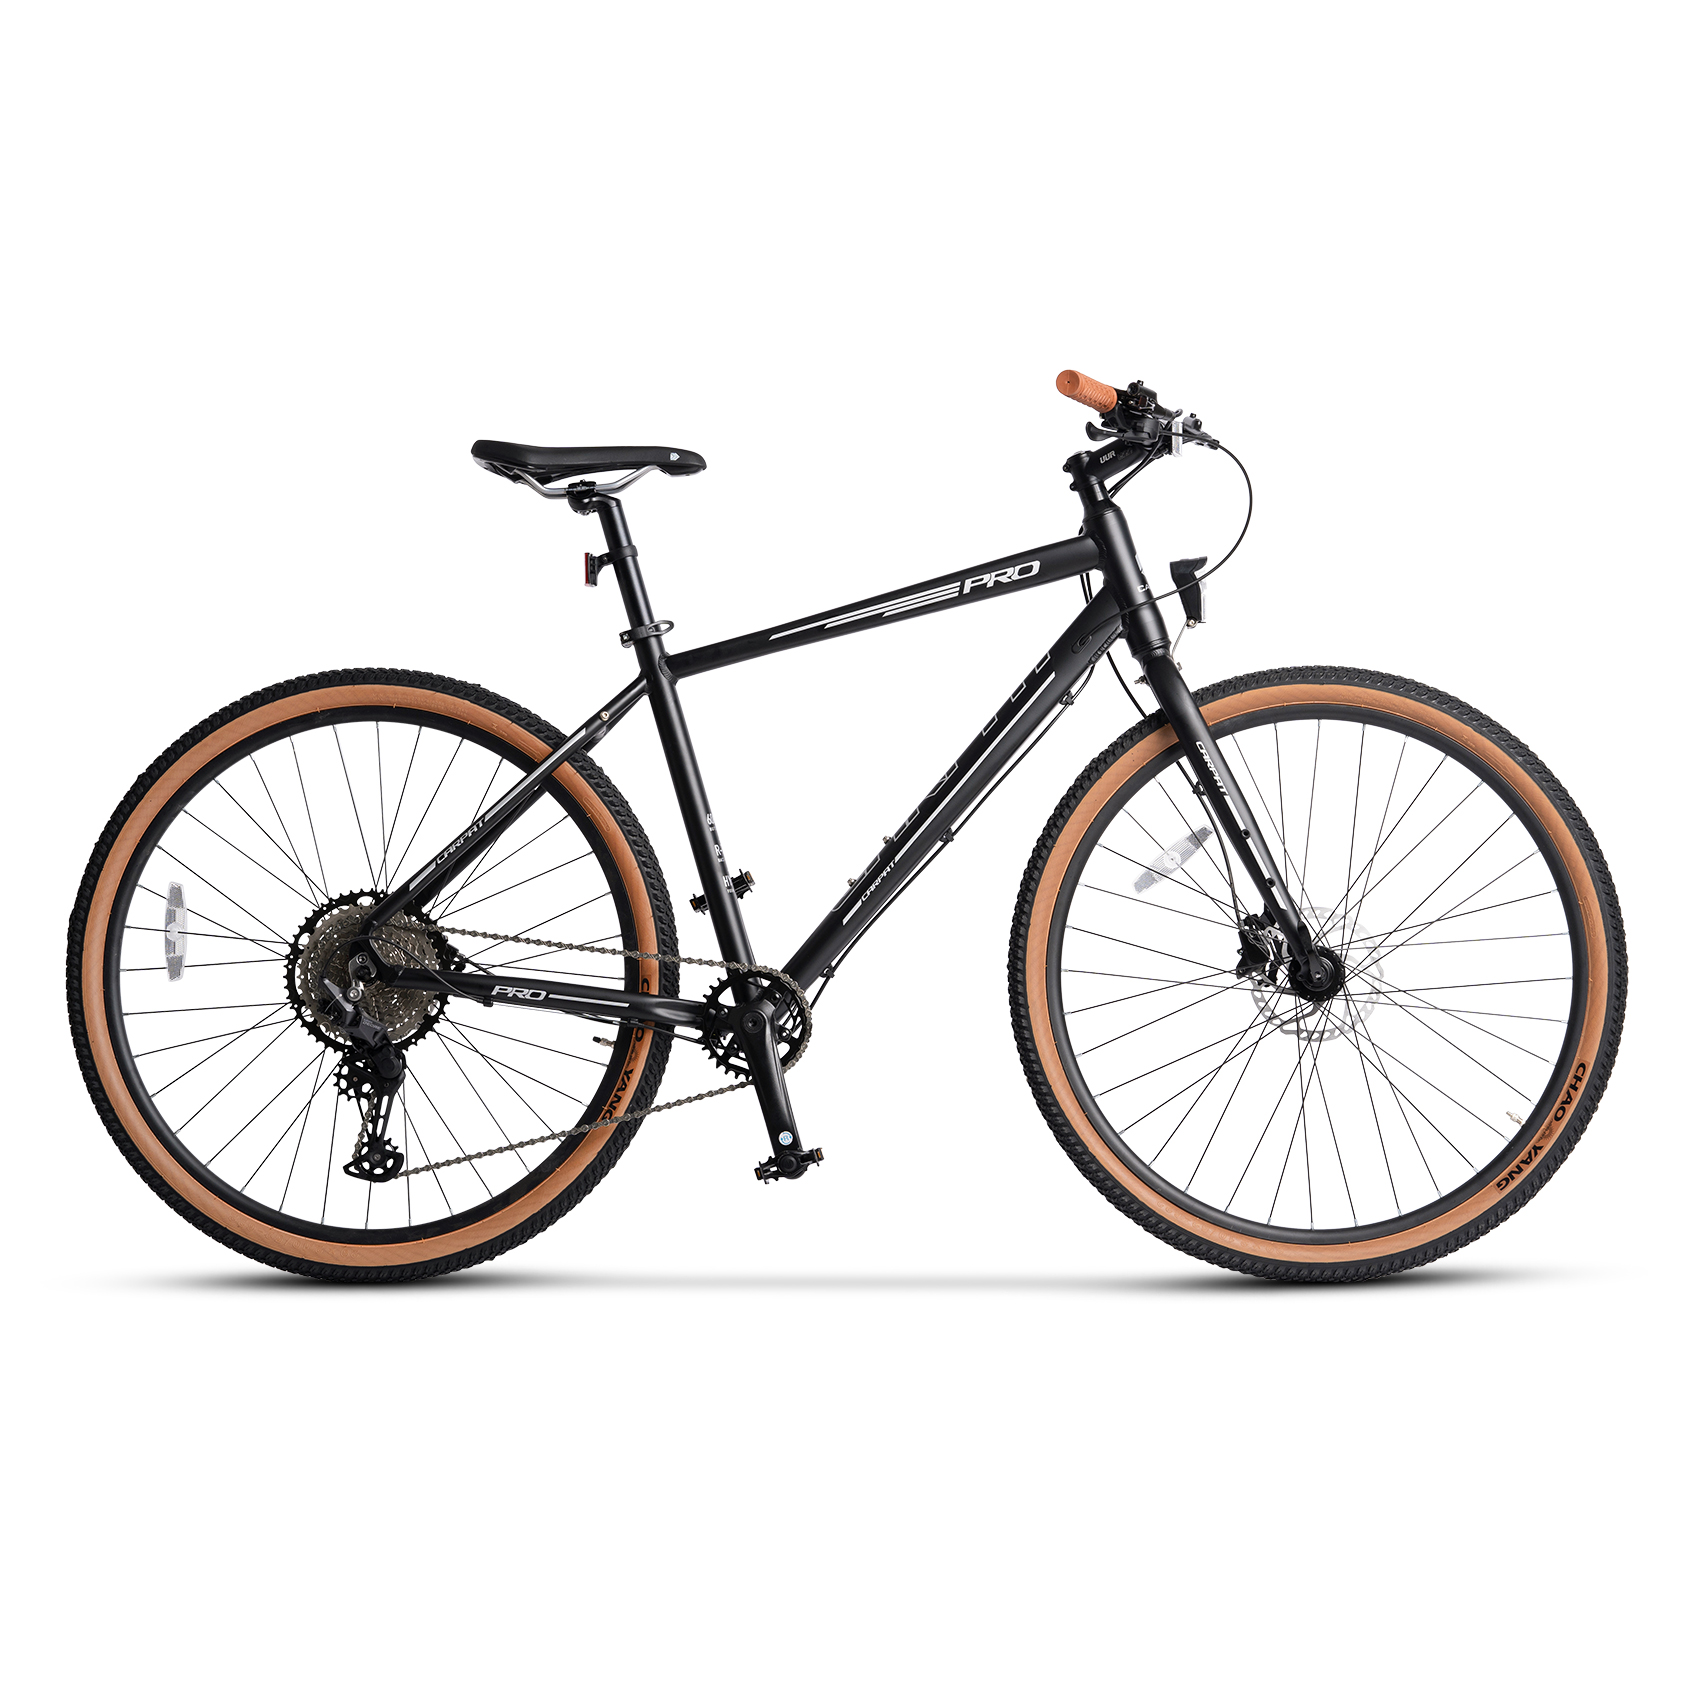 BICICLETE HIDRAULICE - Bicicleta Hidraulica Trekking Carpat PRO C29271H 29", Negru/Gri, https:carpatsport.ro